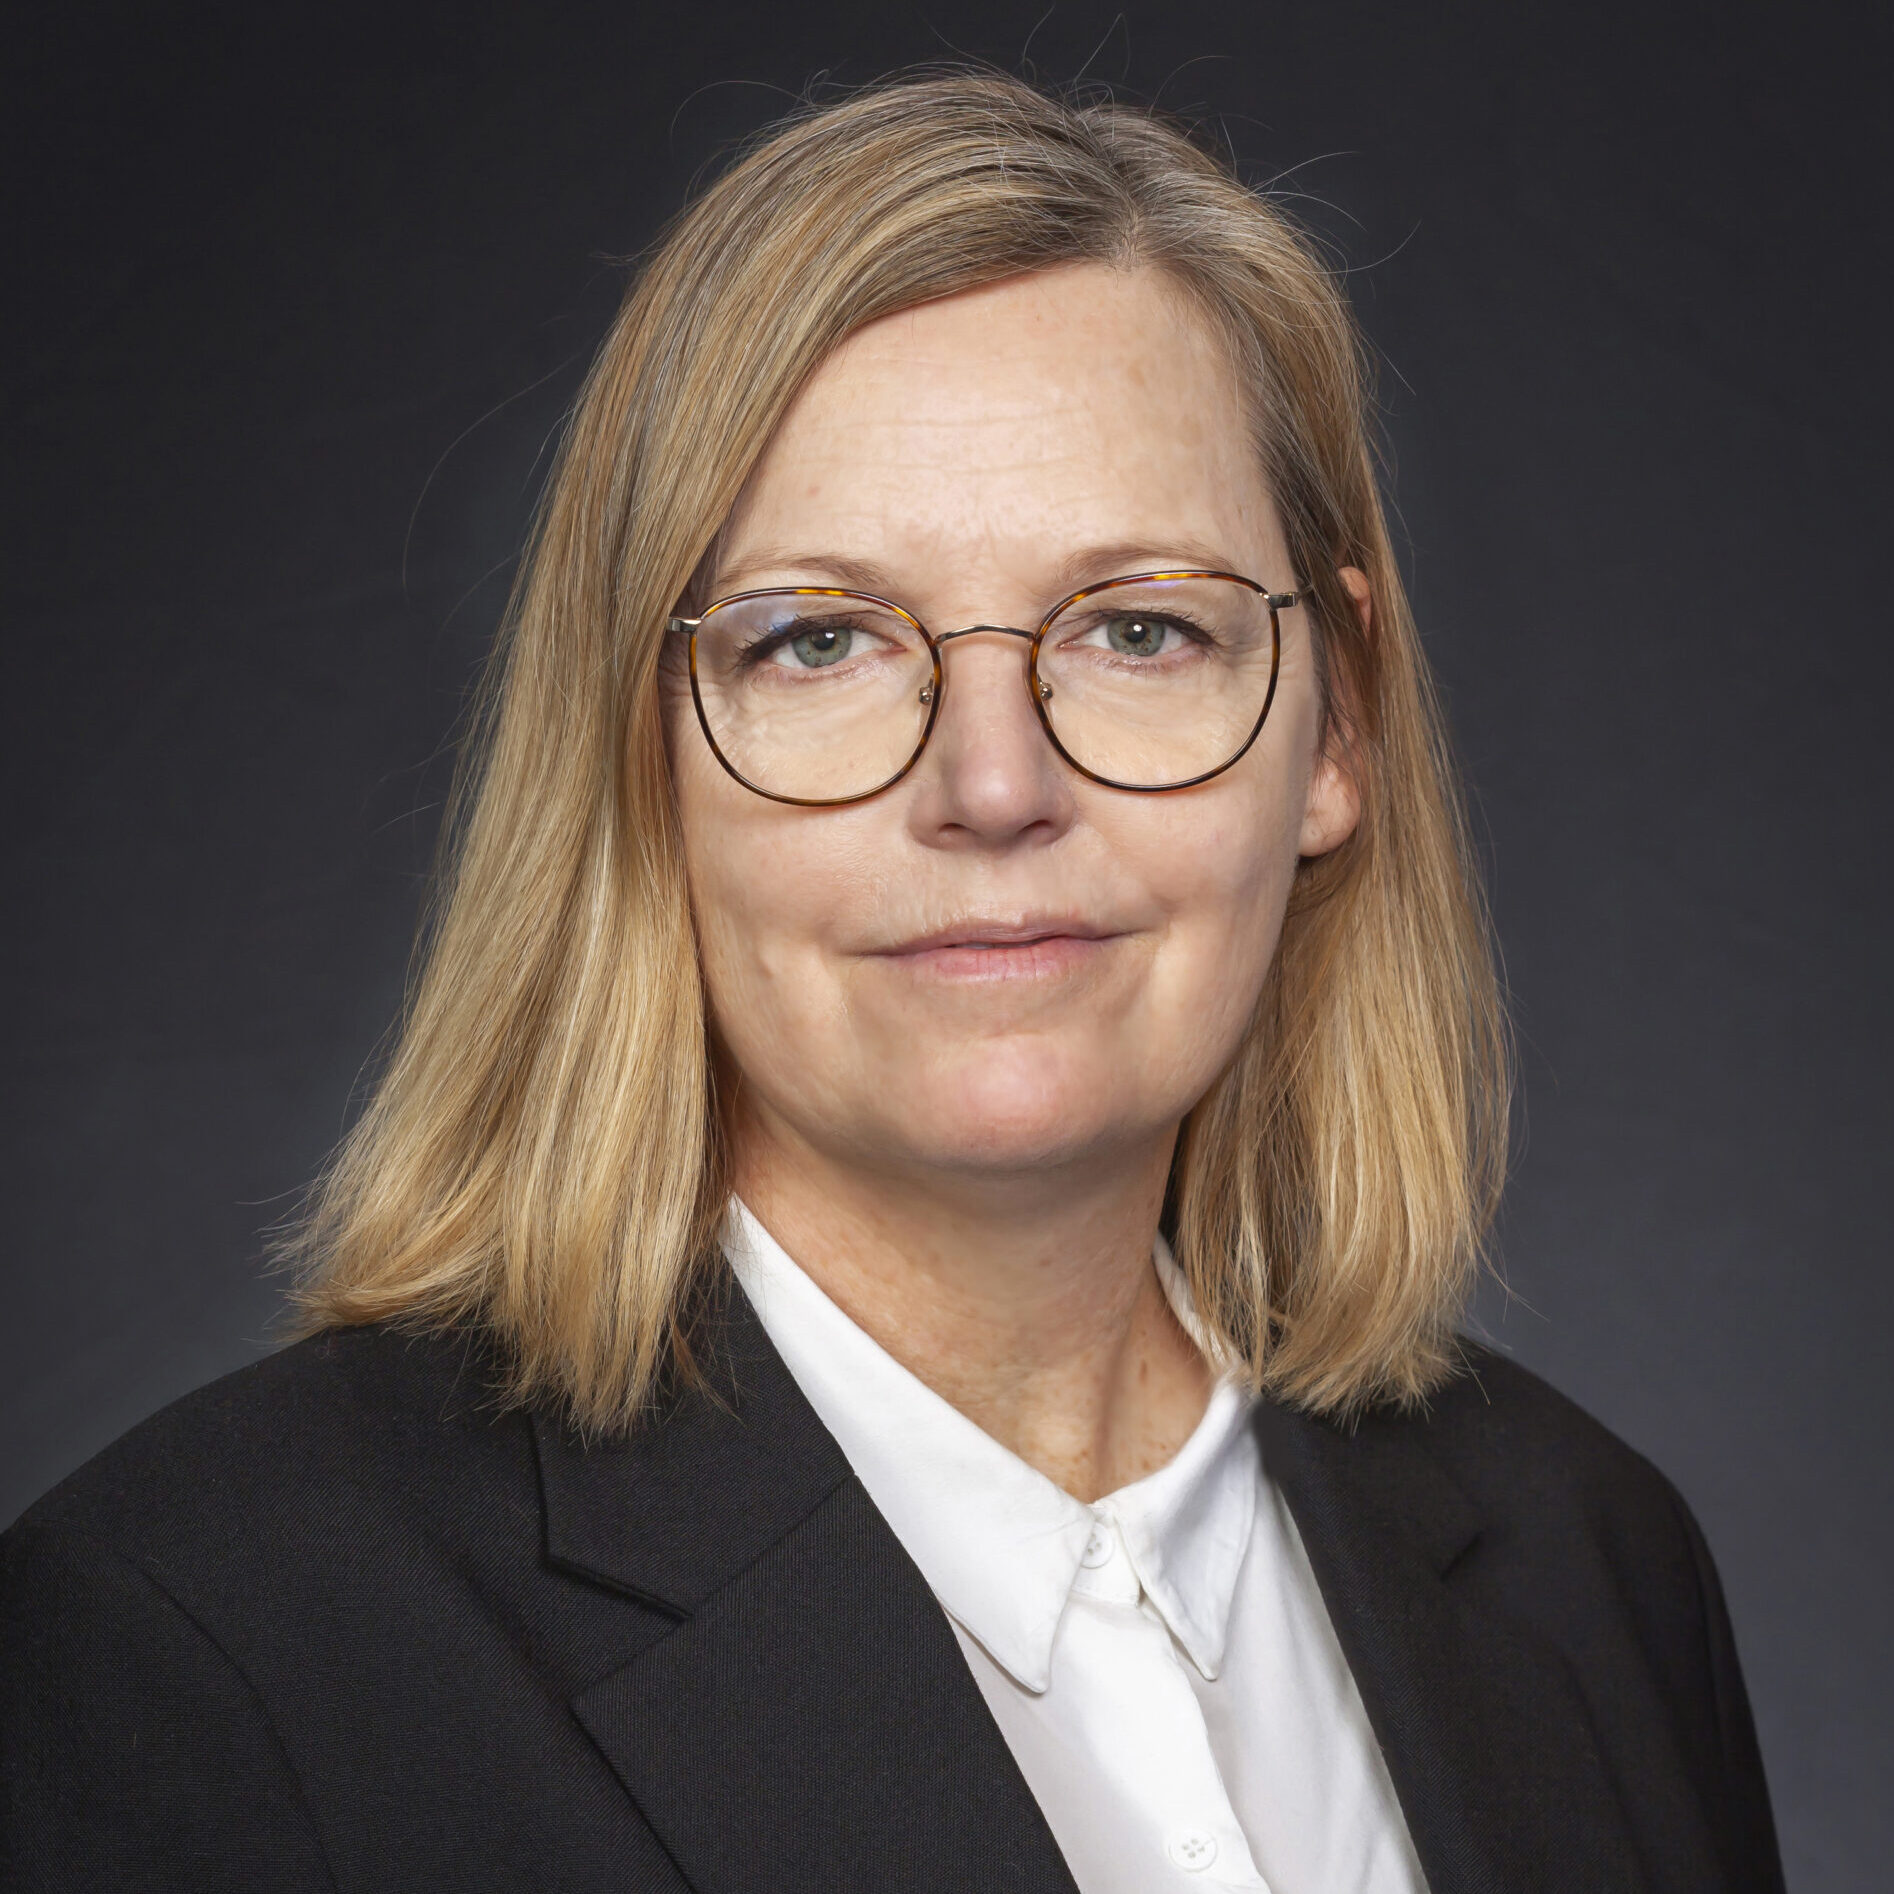 Pia Lindström